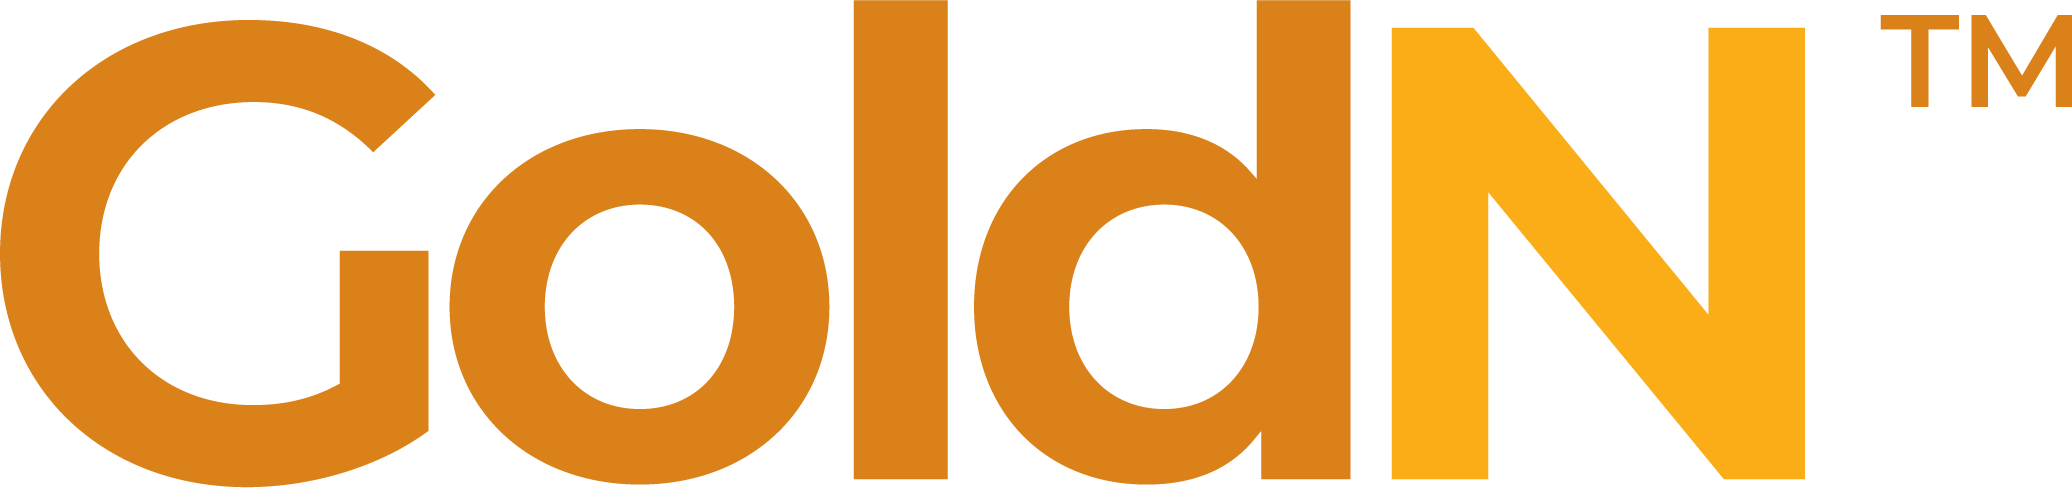 GoldN logo